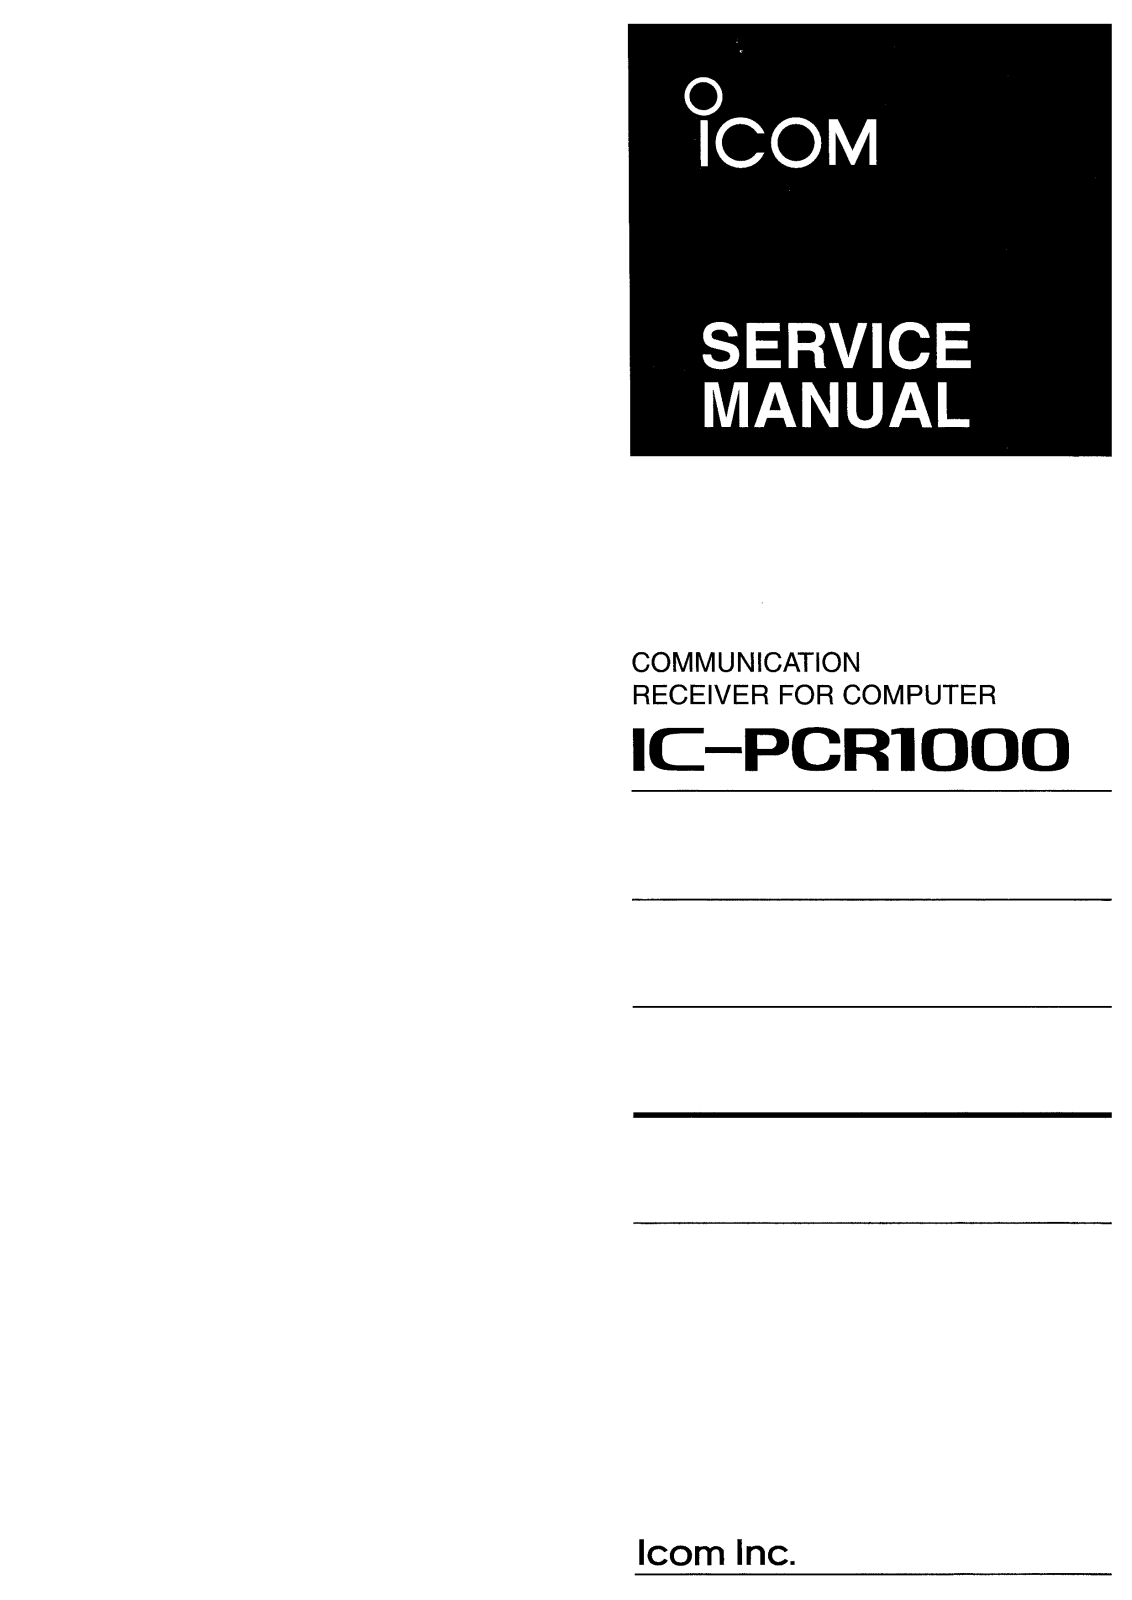 Icom IC-PCR1000 Service Manual